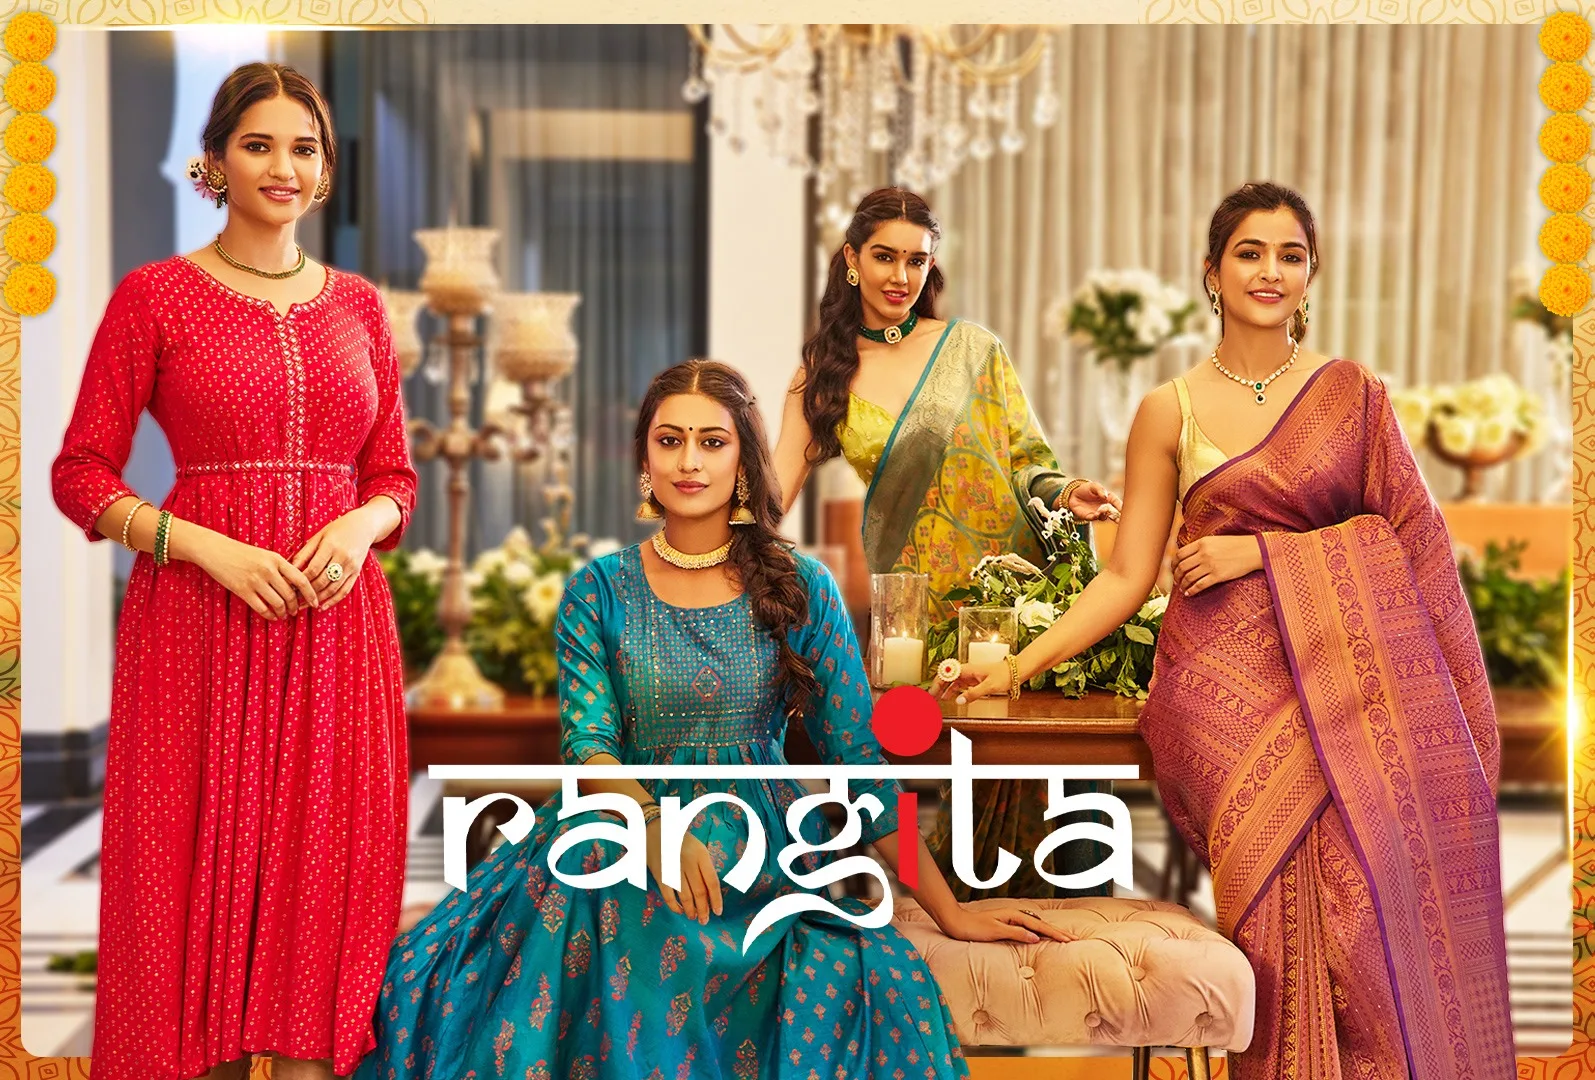 Rangita Witnesses Phenomenal Growth of 6.5X Amidst Festive Collection Focus